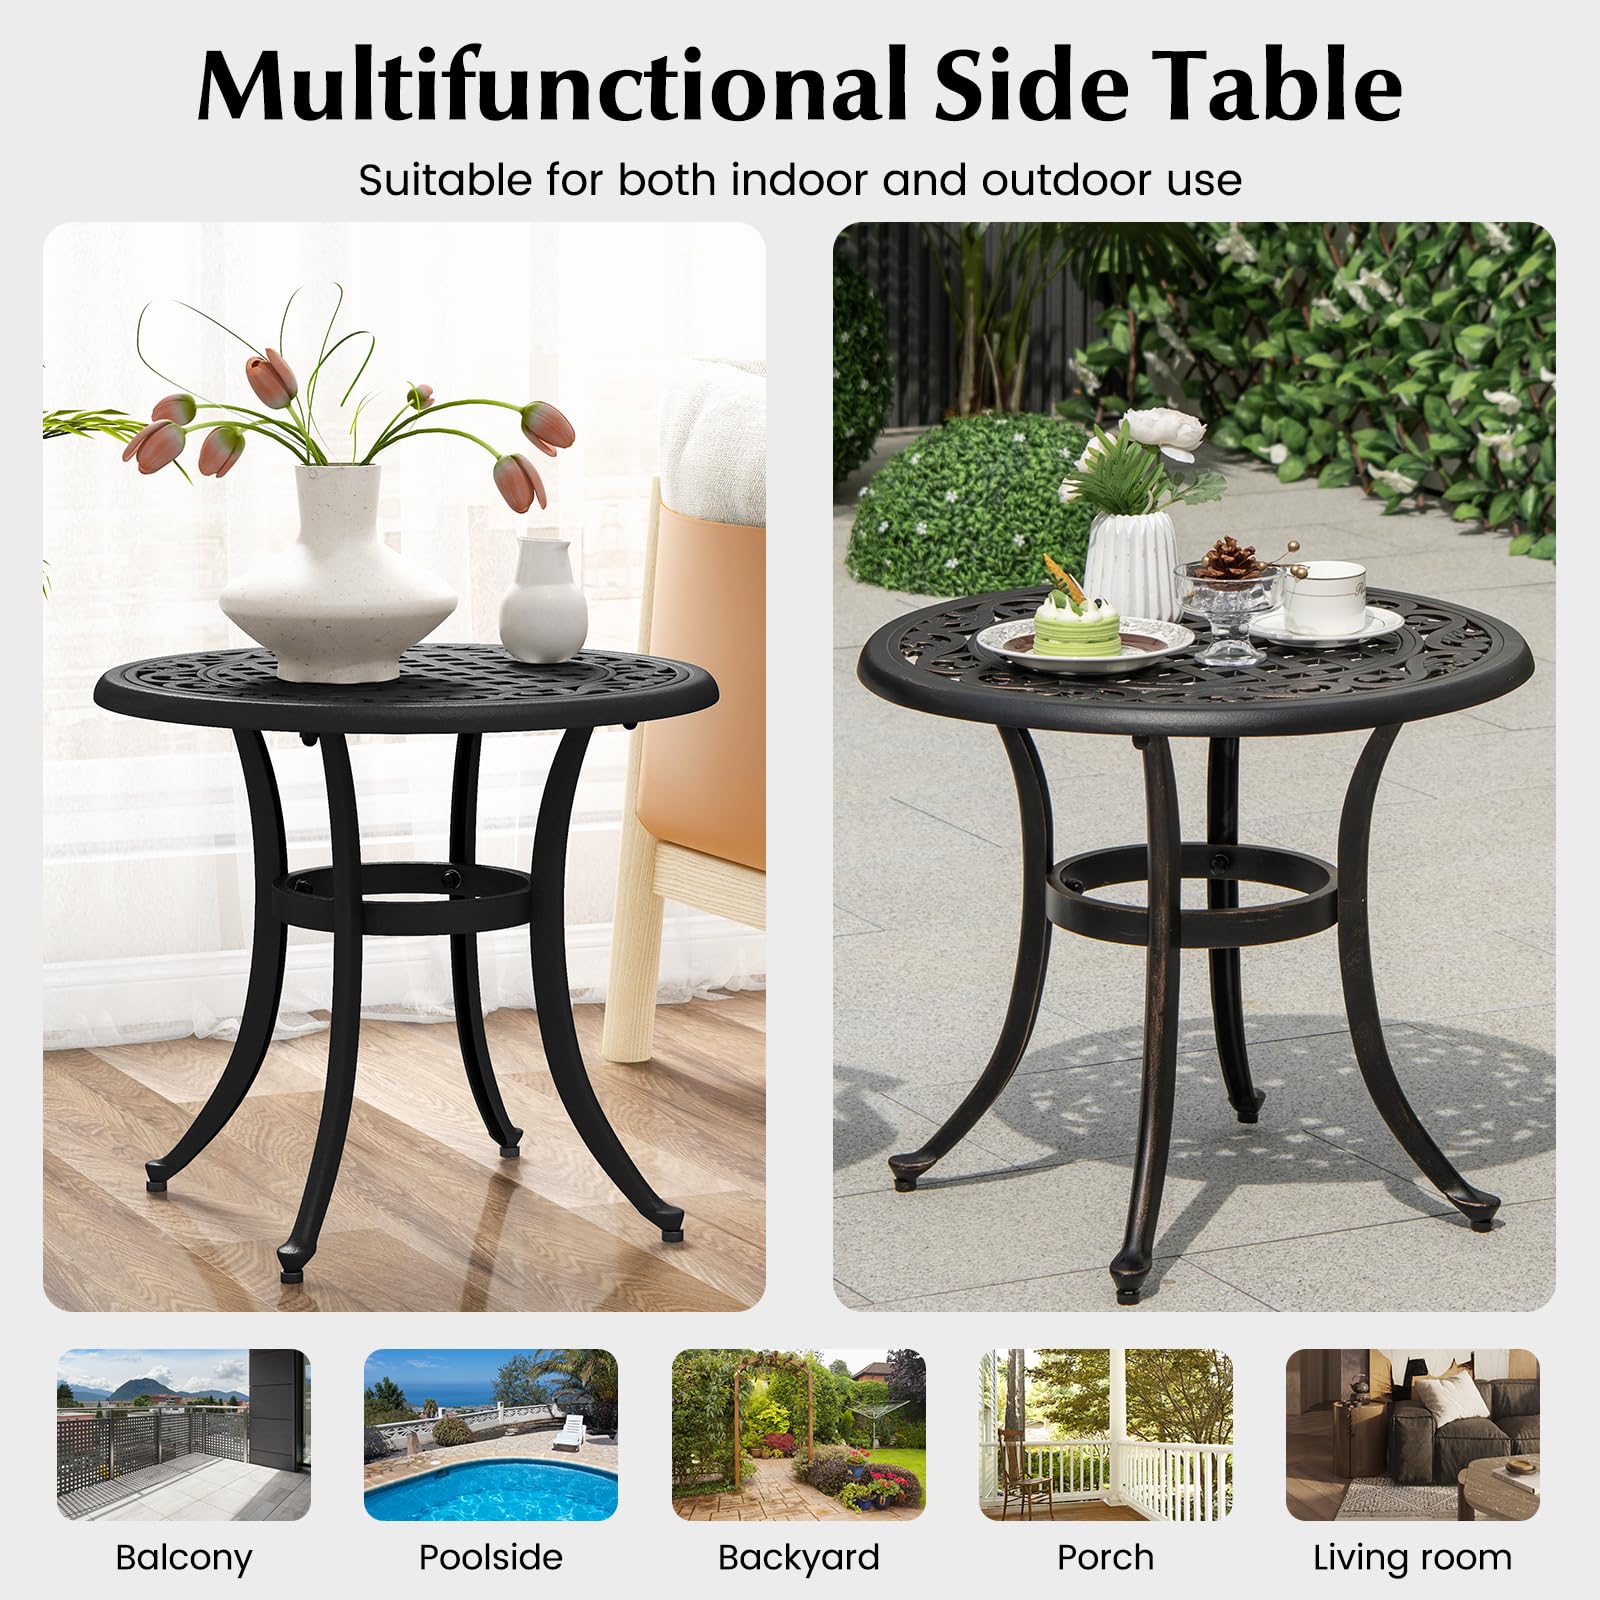 Giantex Patio Bistro Table, 24” Cast Aluminum Round Side Table, Outdoor Coffee Table for Porch, Pool, Backyard, Garden, Balcony